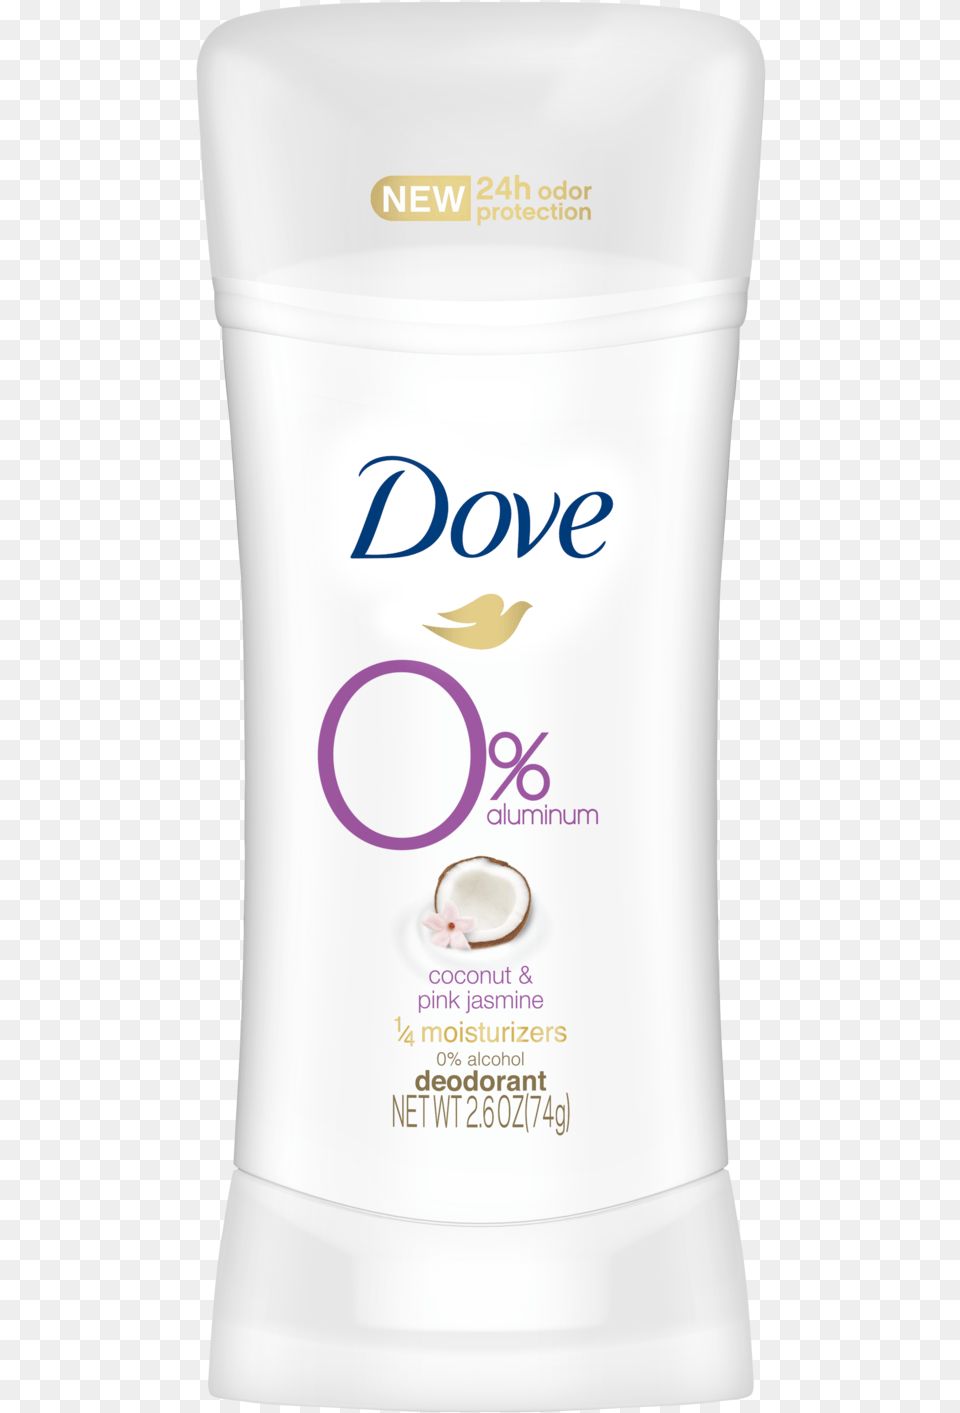 Dove 0 Aluminum Deodorant Coconut Amp Pink Jasmine Dove Advanced Care Deodorant Sensitive, Cosmetics, Bottle, Shaker Free Png Download